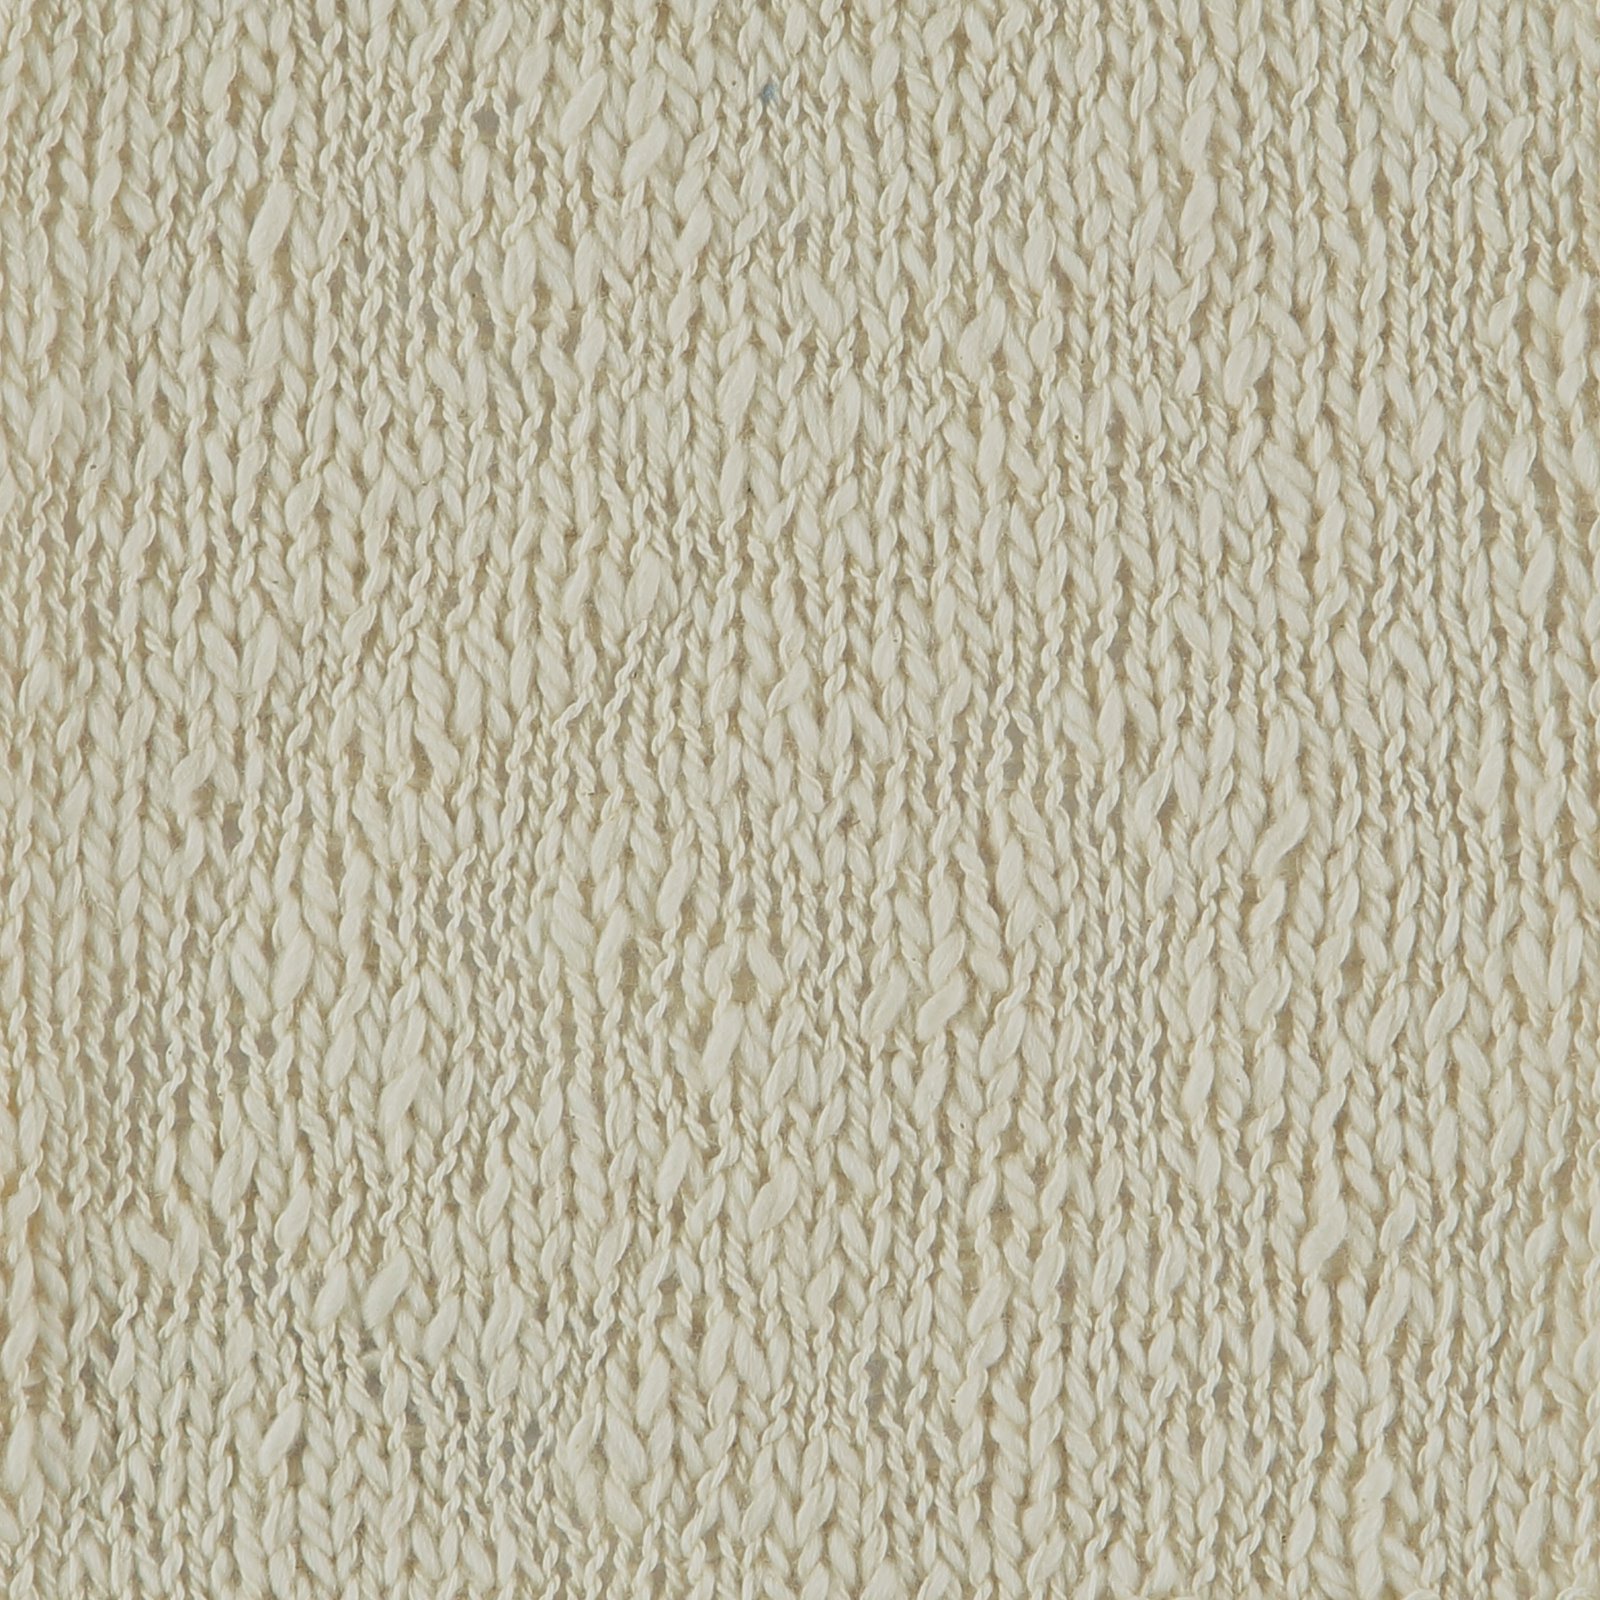 FRAYA, textured cotton yarn "Wavy", nature 90000196_sskit